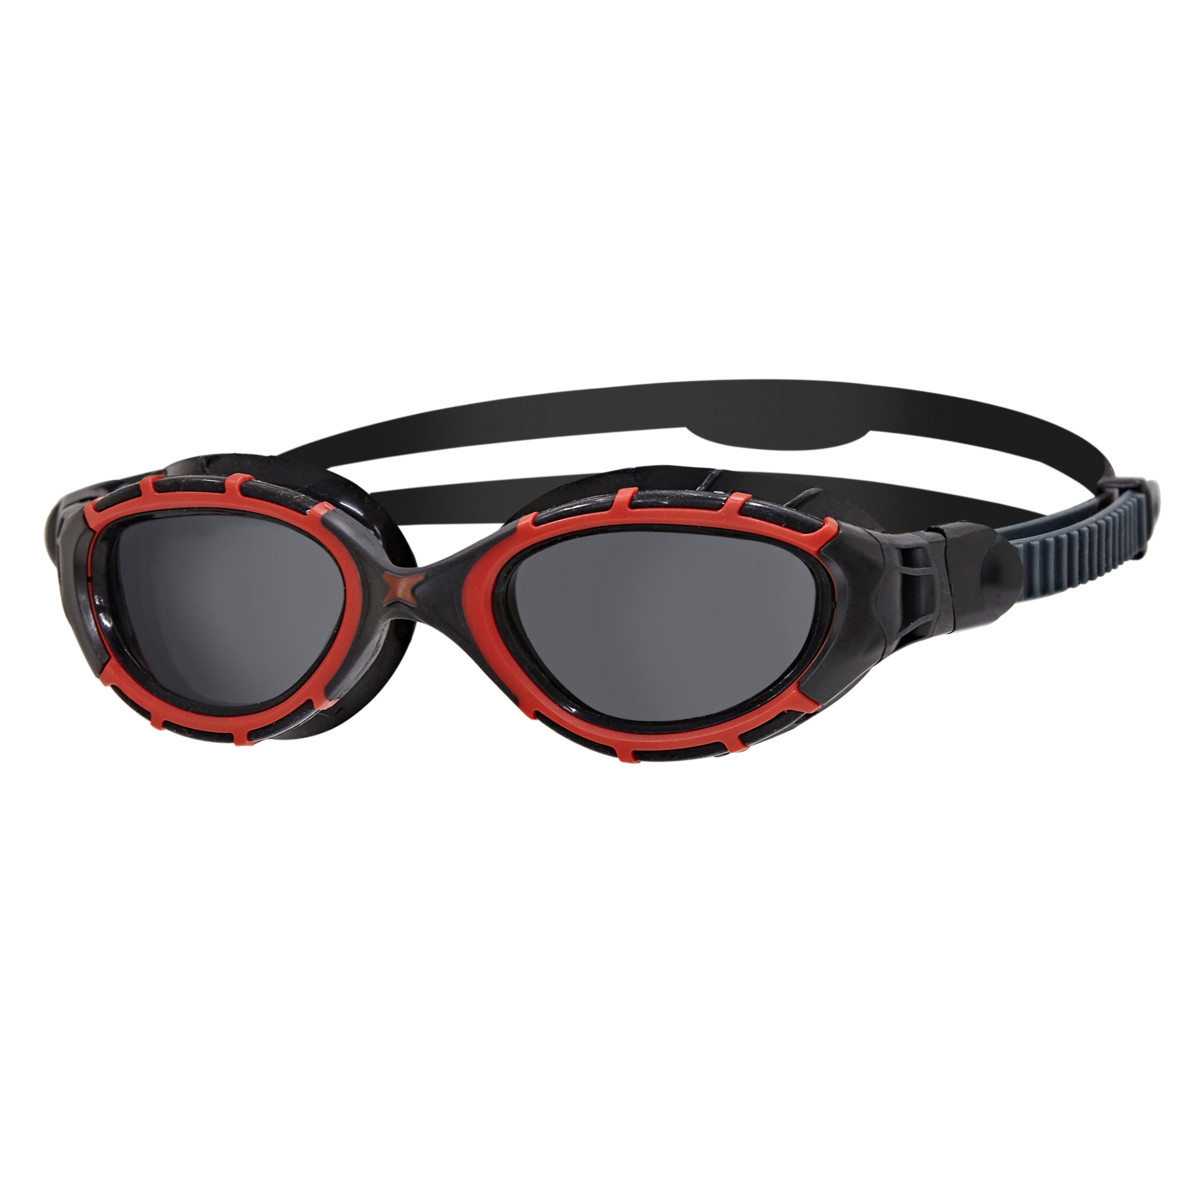 BKRDPSM predator-flex-polarized-goggles-black-red-polarized-smoke-lens